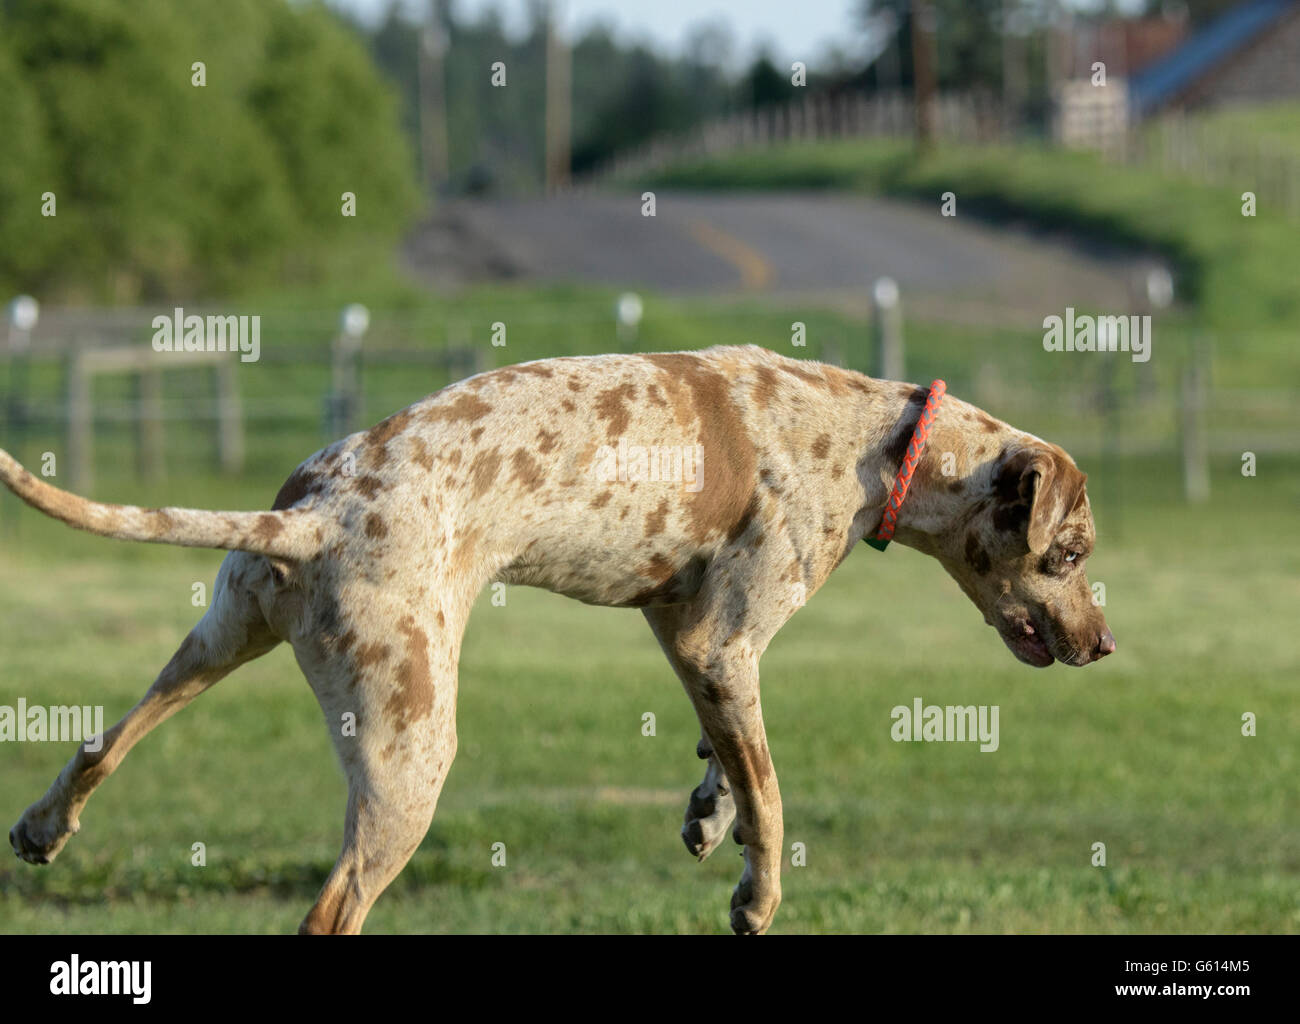 Catahoula Leopard Hund auf Rasen, 18 Monate alter Stockfotografie - Alamy